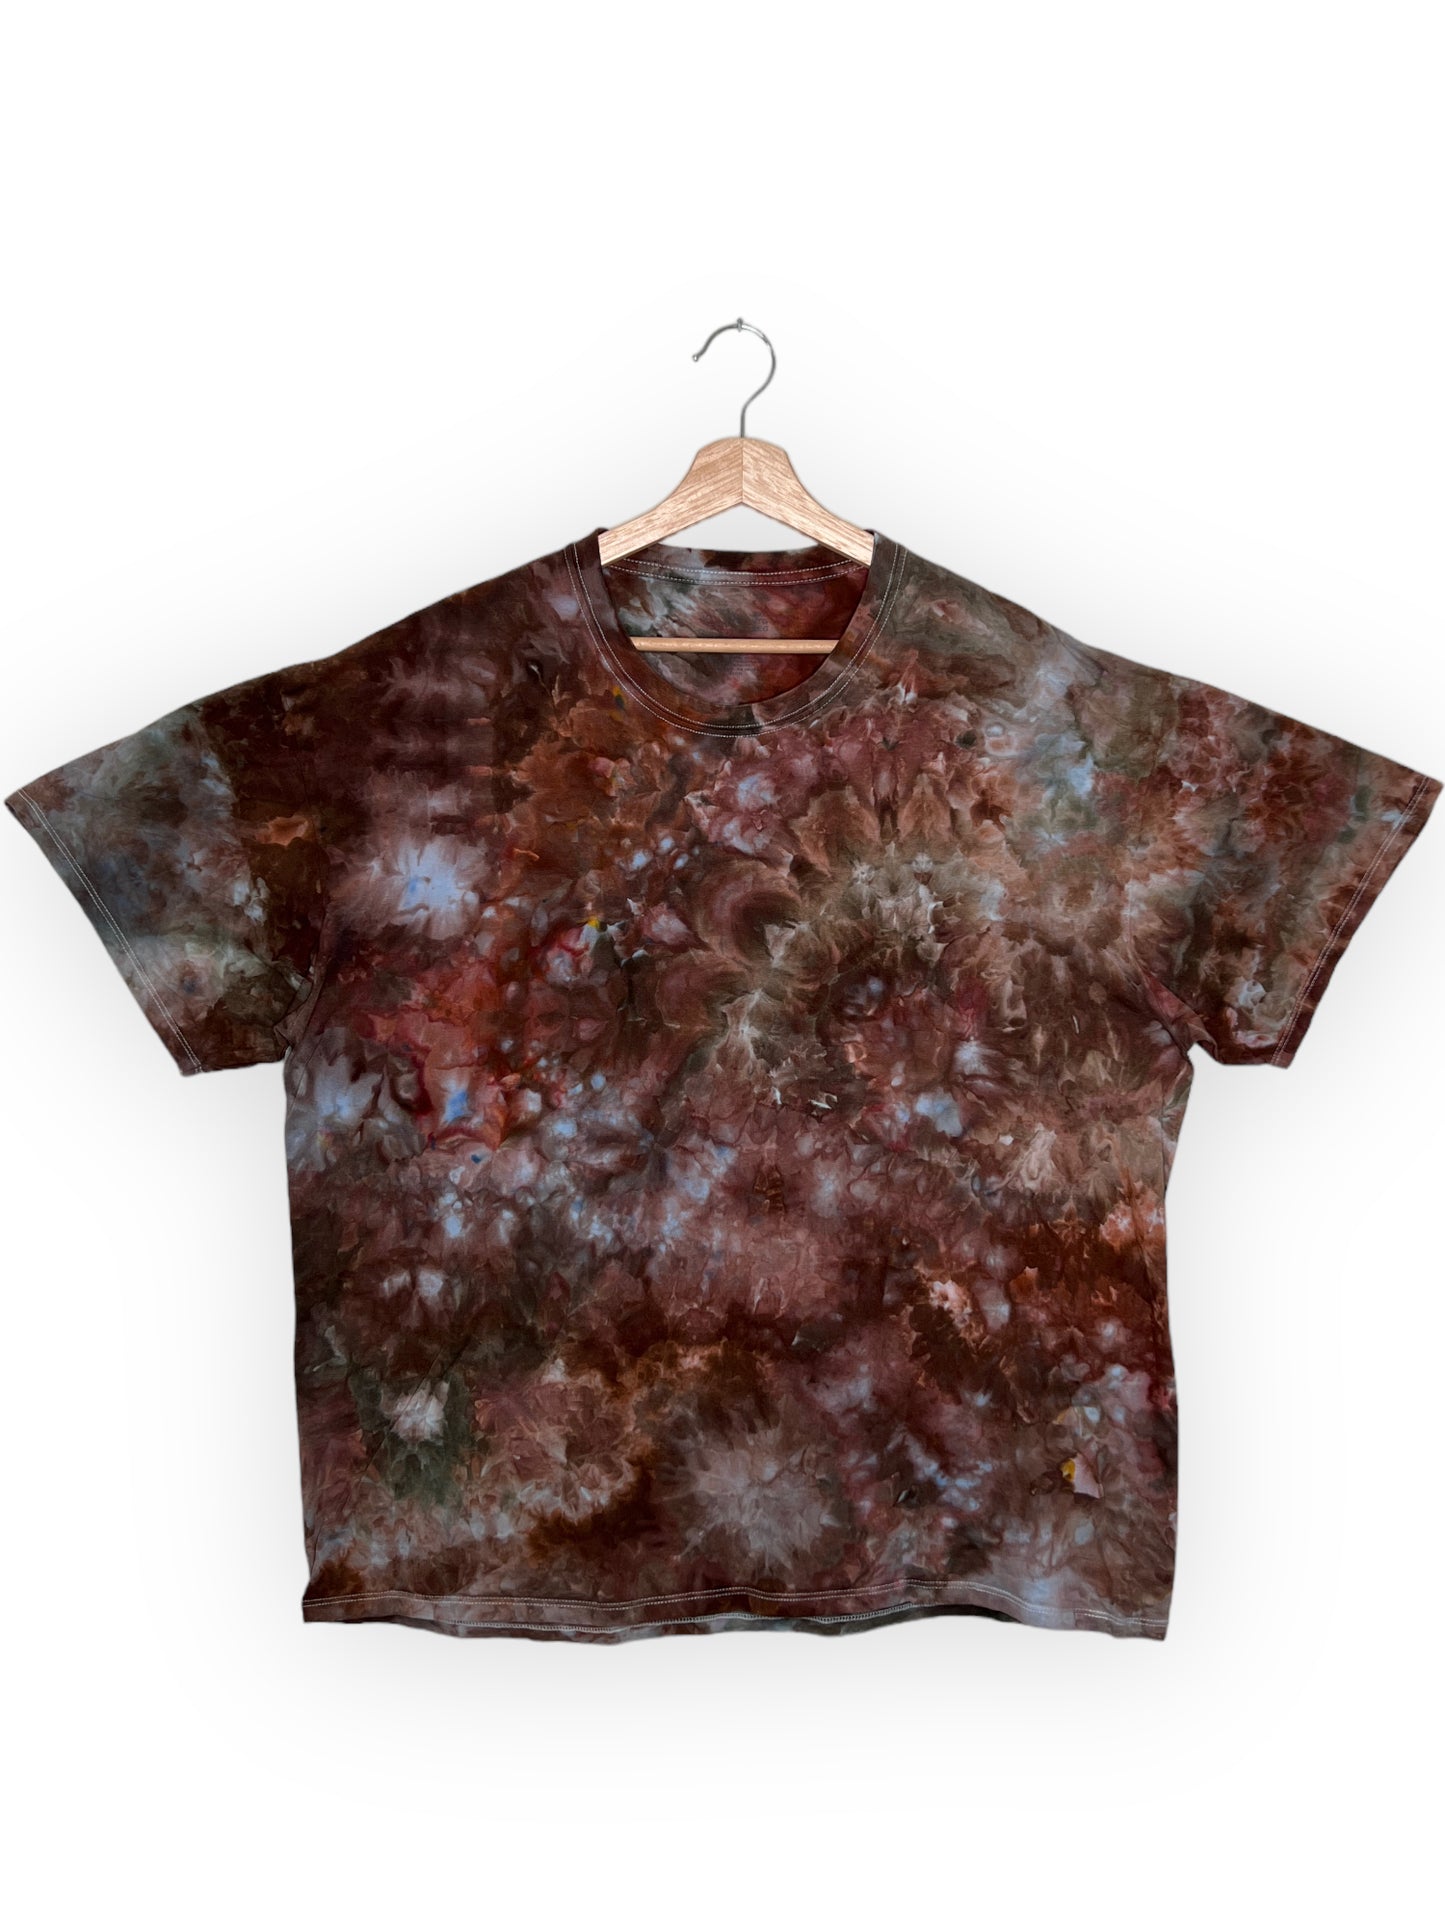 Burnished Wood Watercolor T-Shirt (XXL)